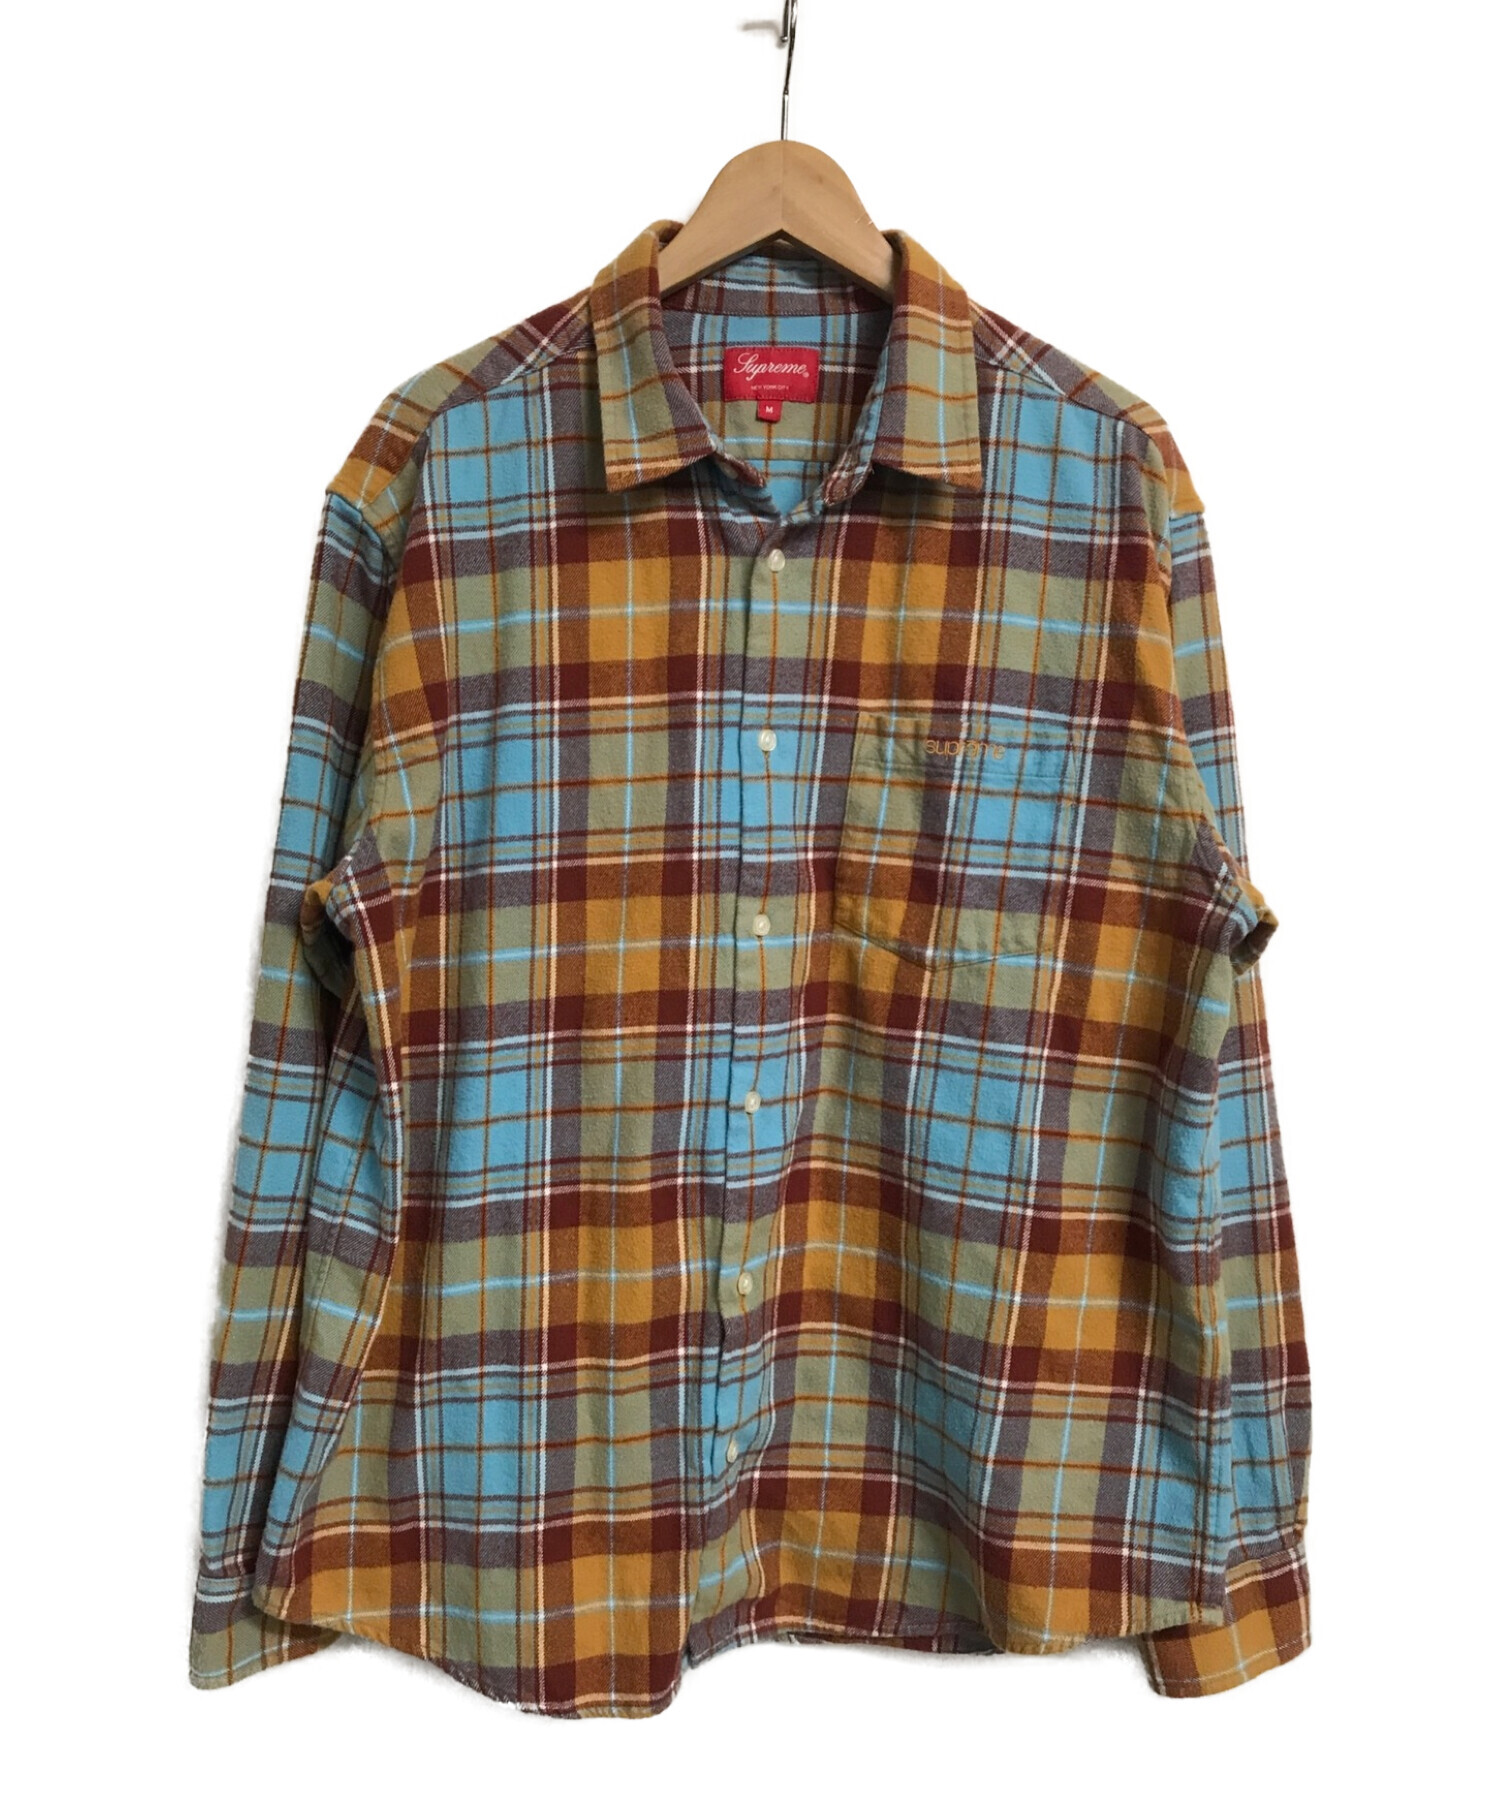 Supreme (シュプリーム) Tartan Plaid Flannel Shirt オレンジ サイズ:M